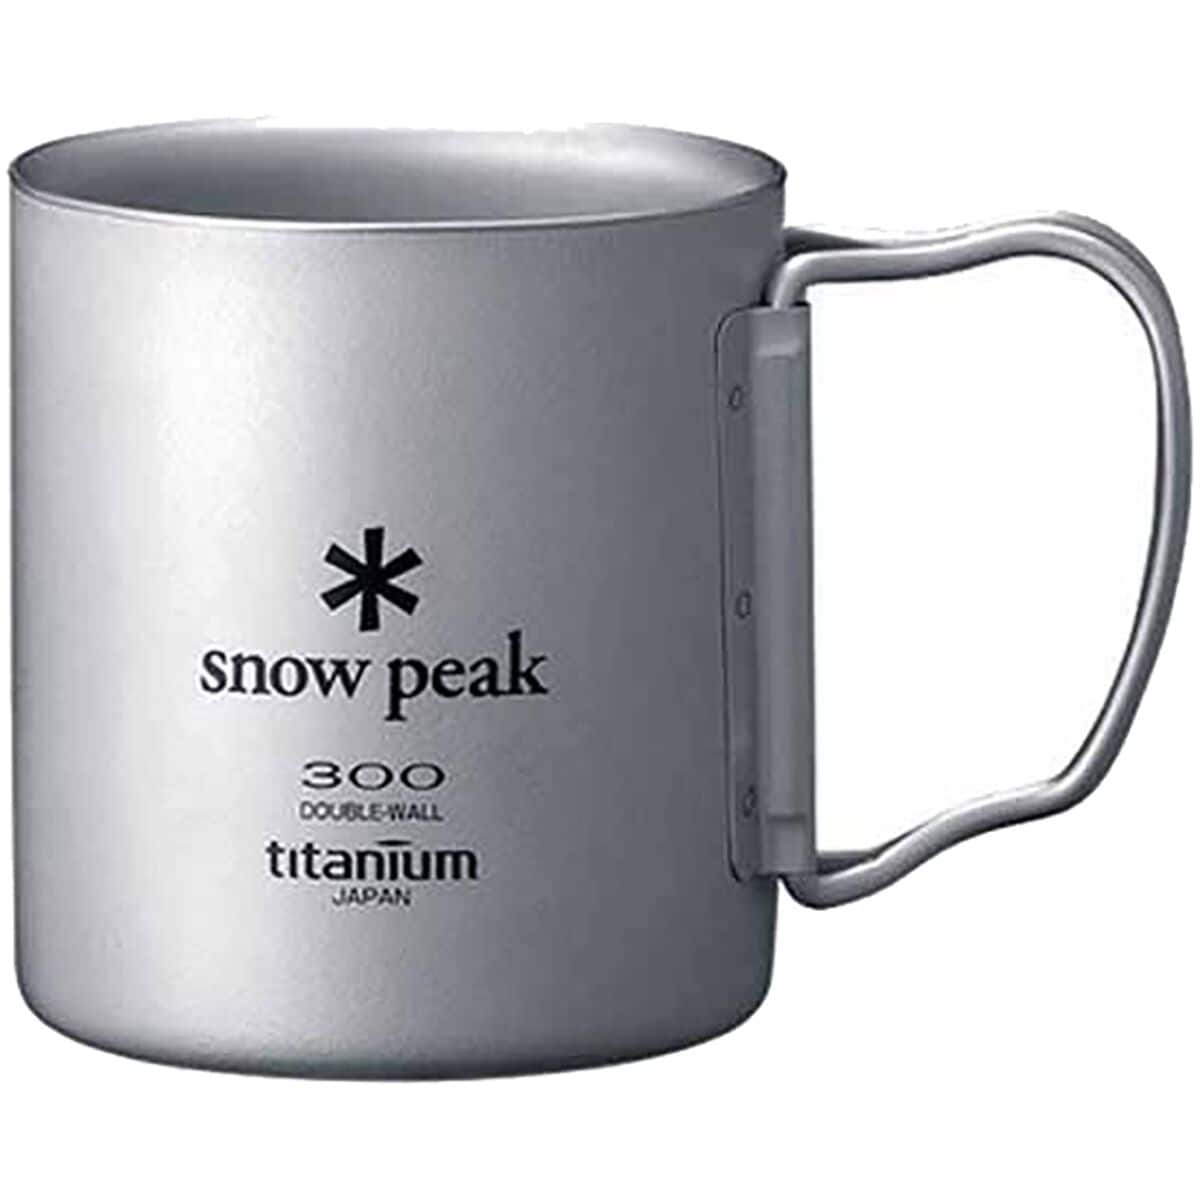 Snow Peak Titanium Double-Wall Mug